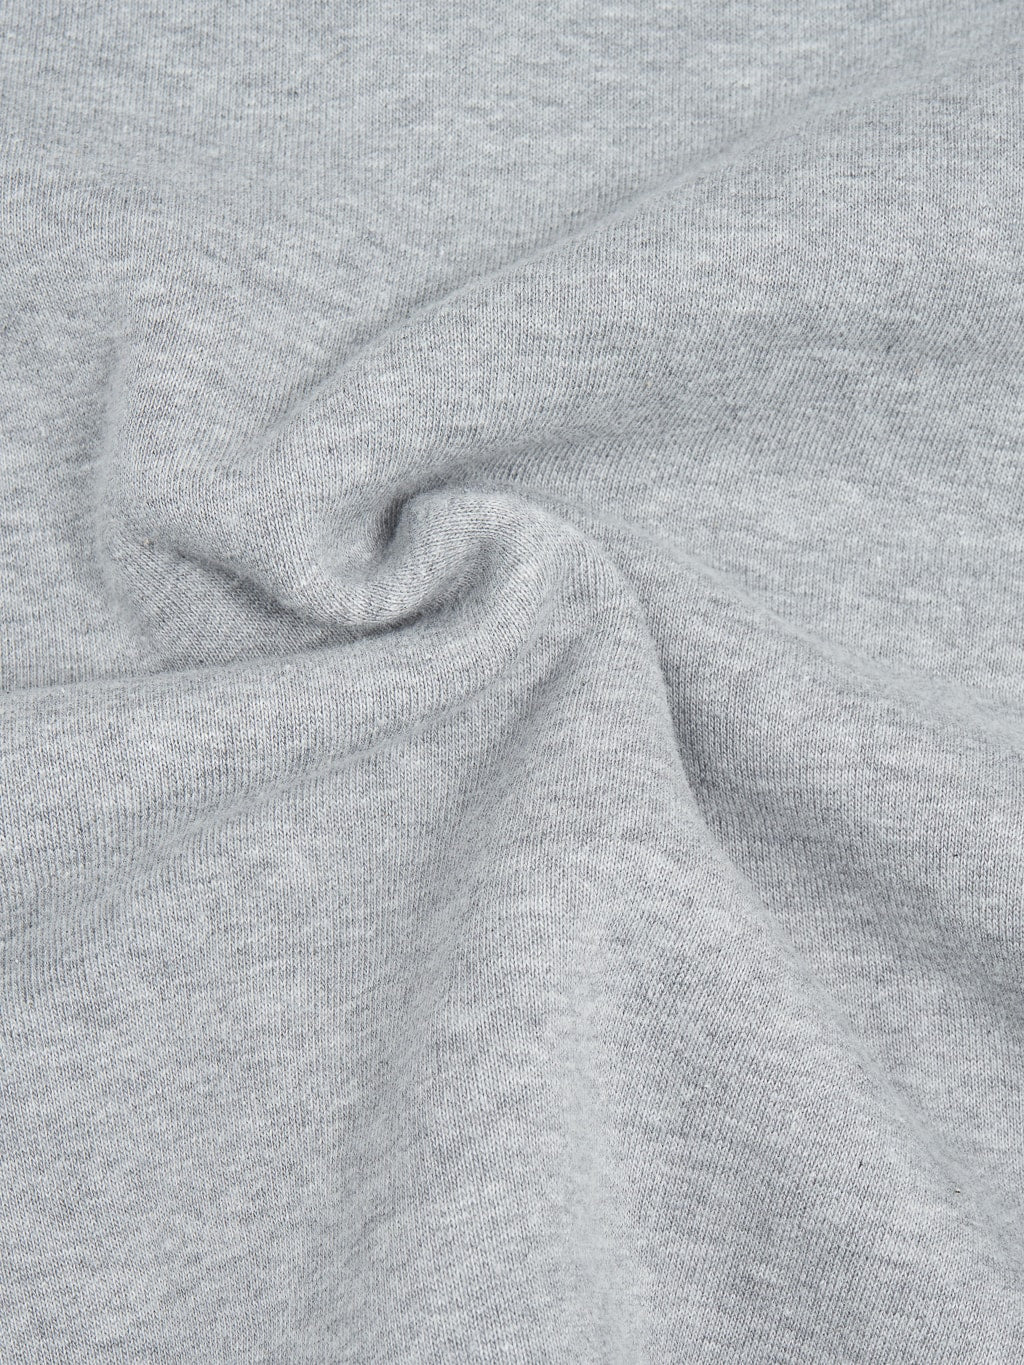 the strike gold zip hoodie grey fabric texture